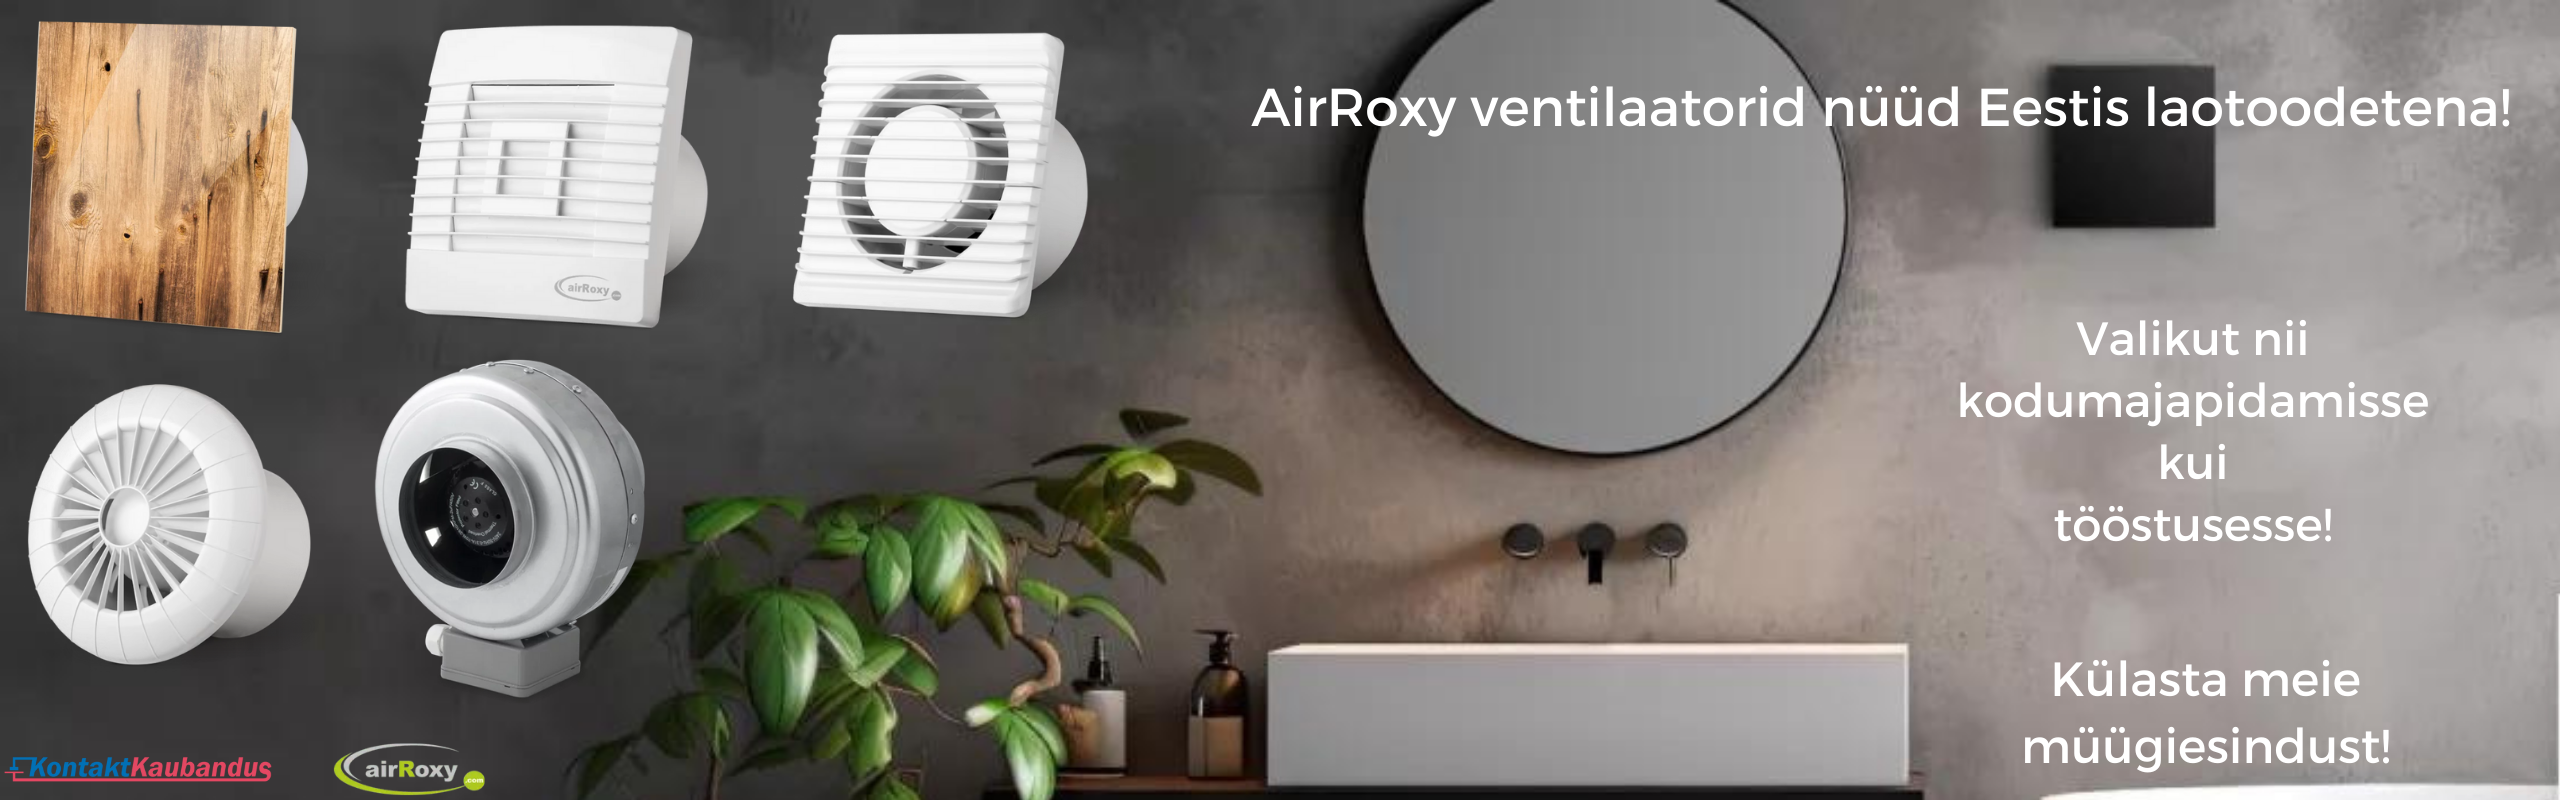 AirRoxy ventilaatorid